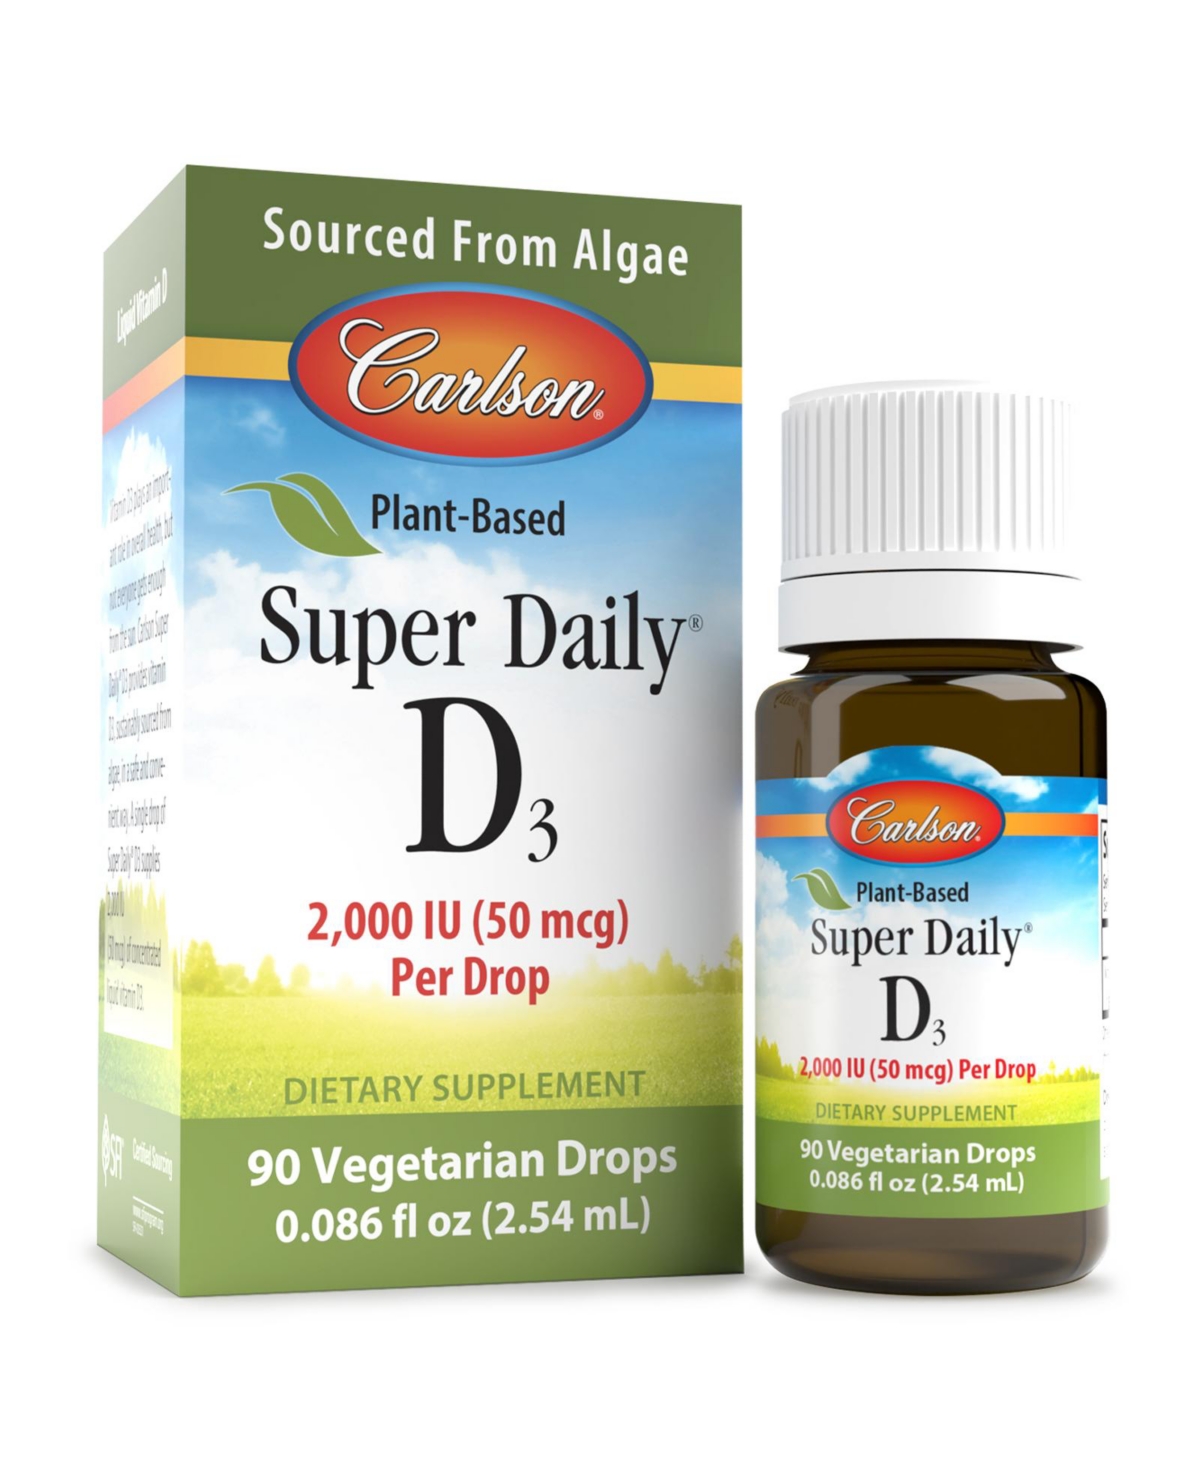 Carlson - Plant-Based Super Daily D3 2000 Iu (50 mcg) per Drop, Vegetarian Vitamin D Drops, Sourced from Algae, Unflavored, 90 Drops (2.5